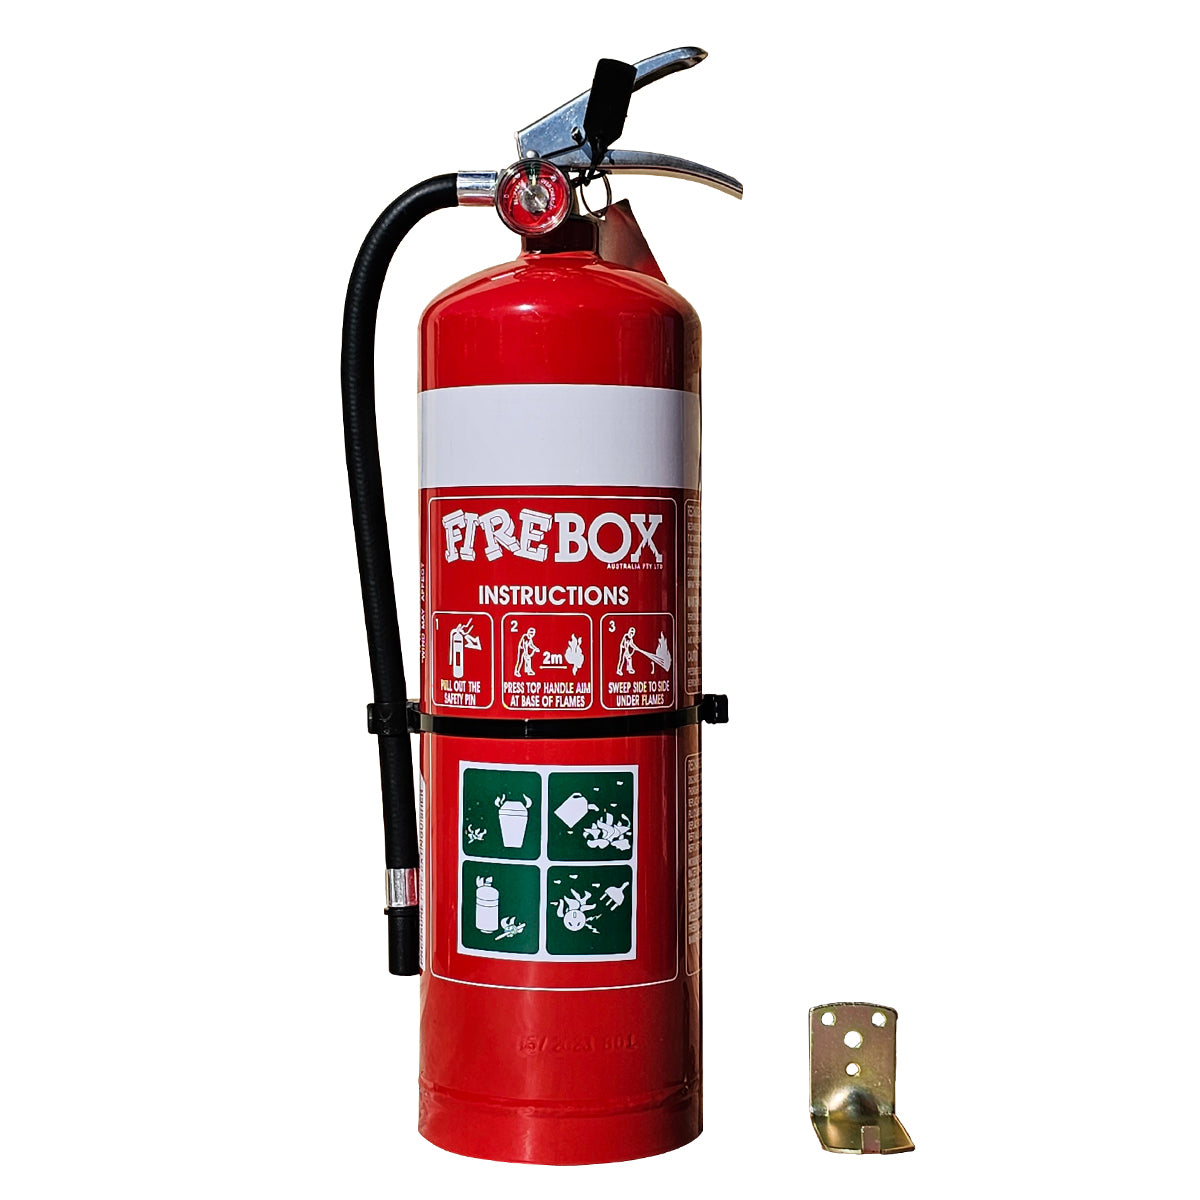 4.5kg Dry Chemical Powder Extinguisher - Premium ABE Extinguishers from Firebox - Shop now at Firebox Australia